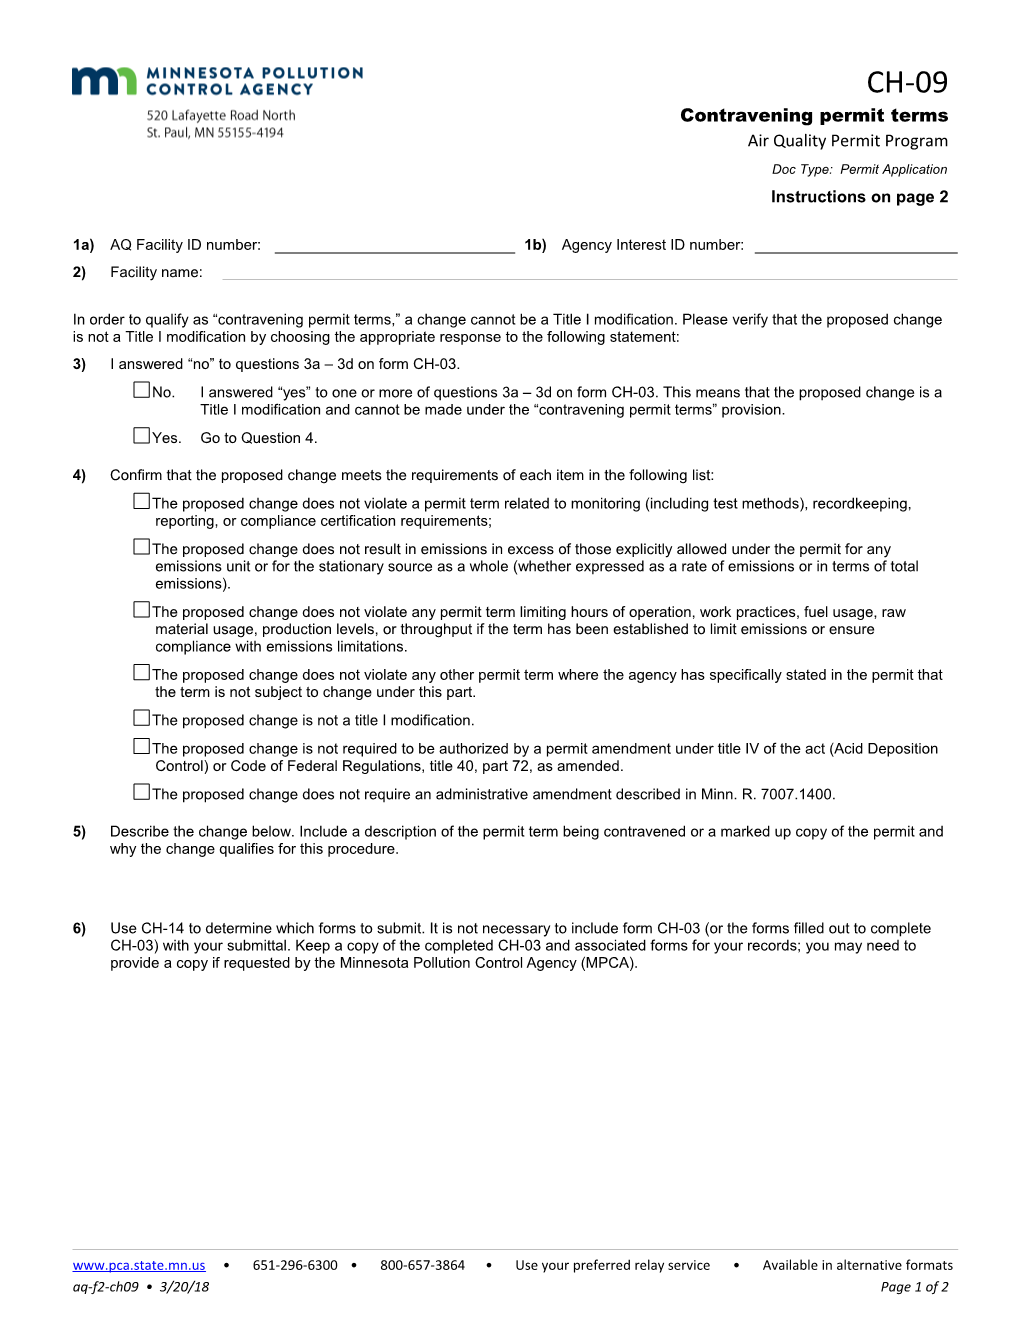 CH-09 Contravening Permit Terms - Air Quality Permit Program